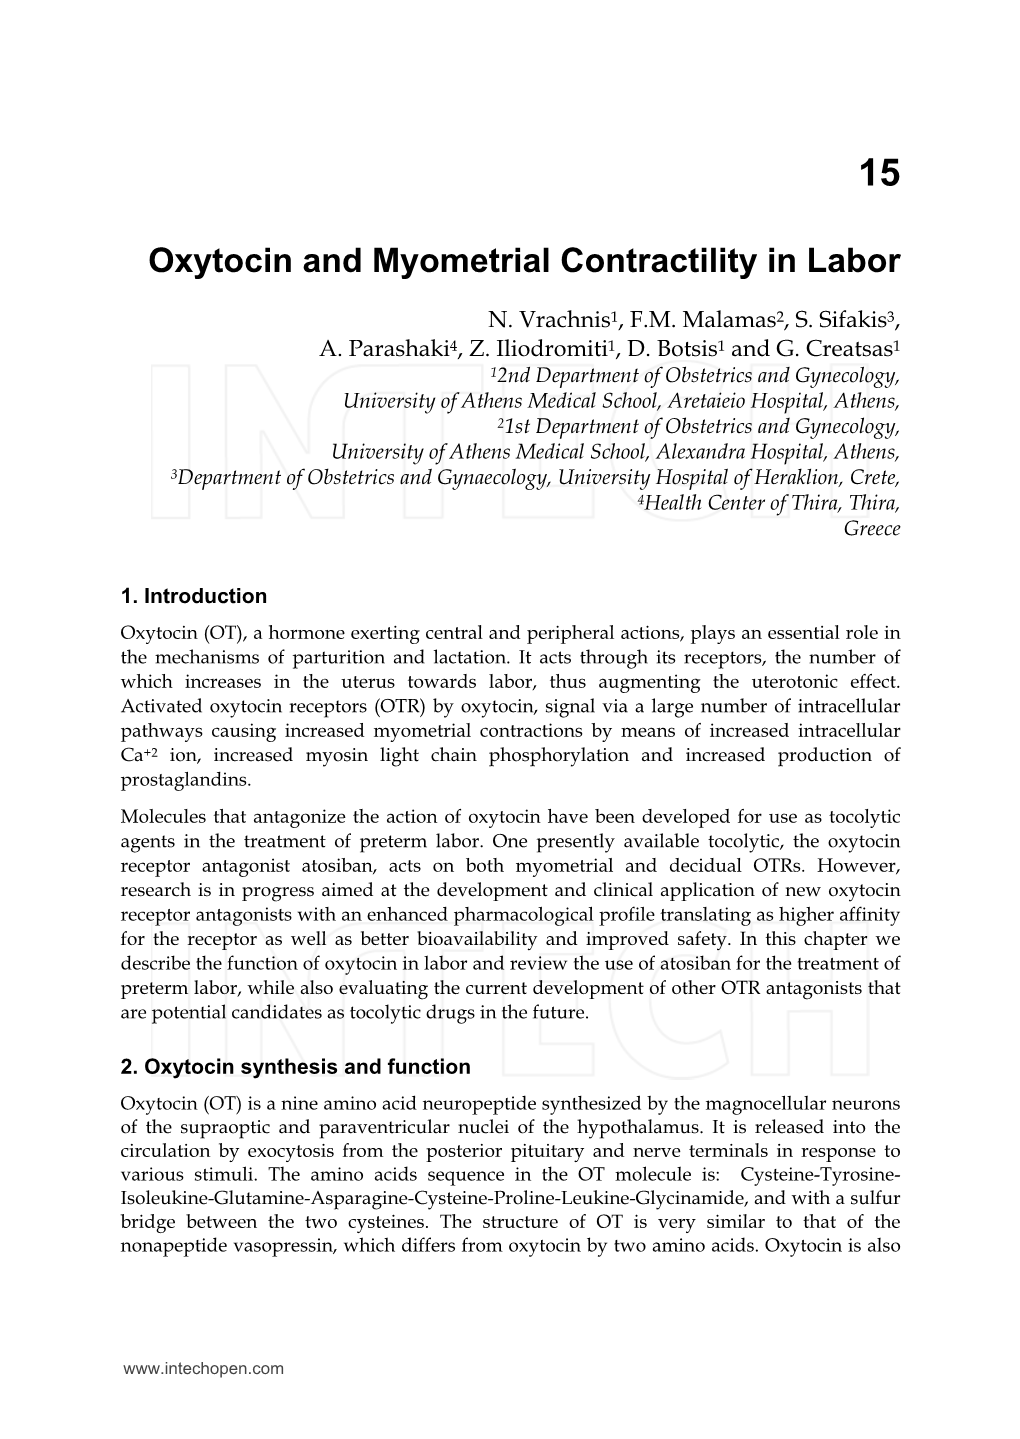 Oxytocin and Myometrial Contractility in Labor